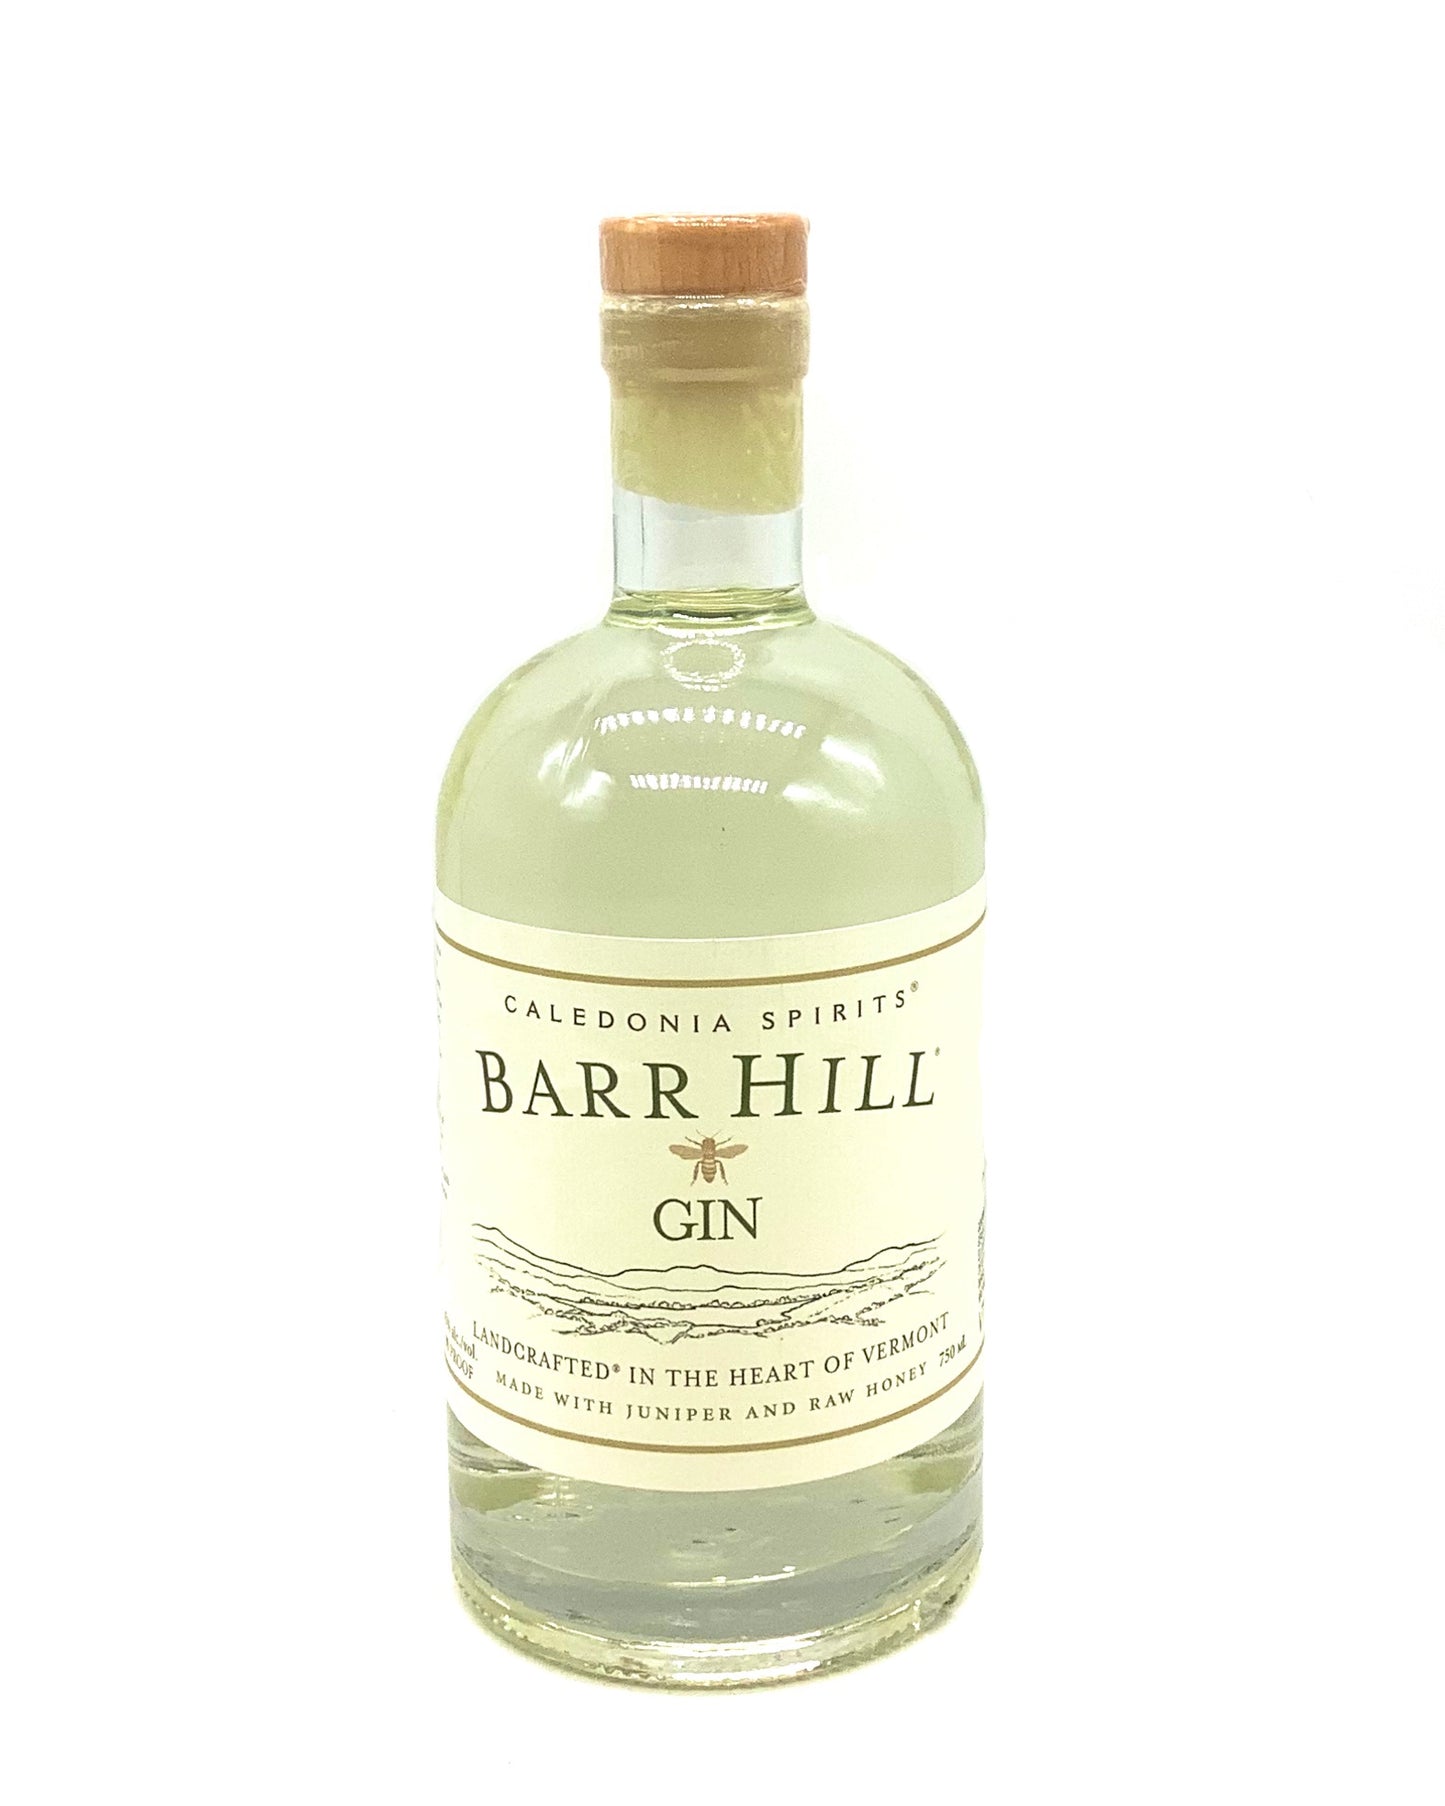 Caledonia Spirits "Barr Hill" Gin, Vermont 750ml